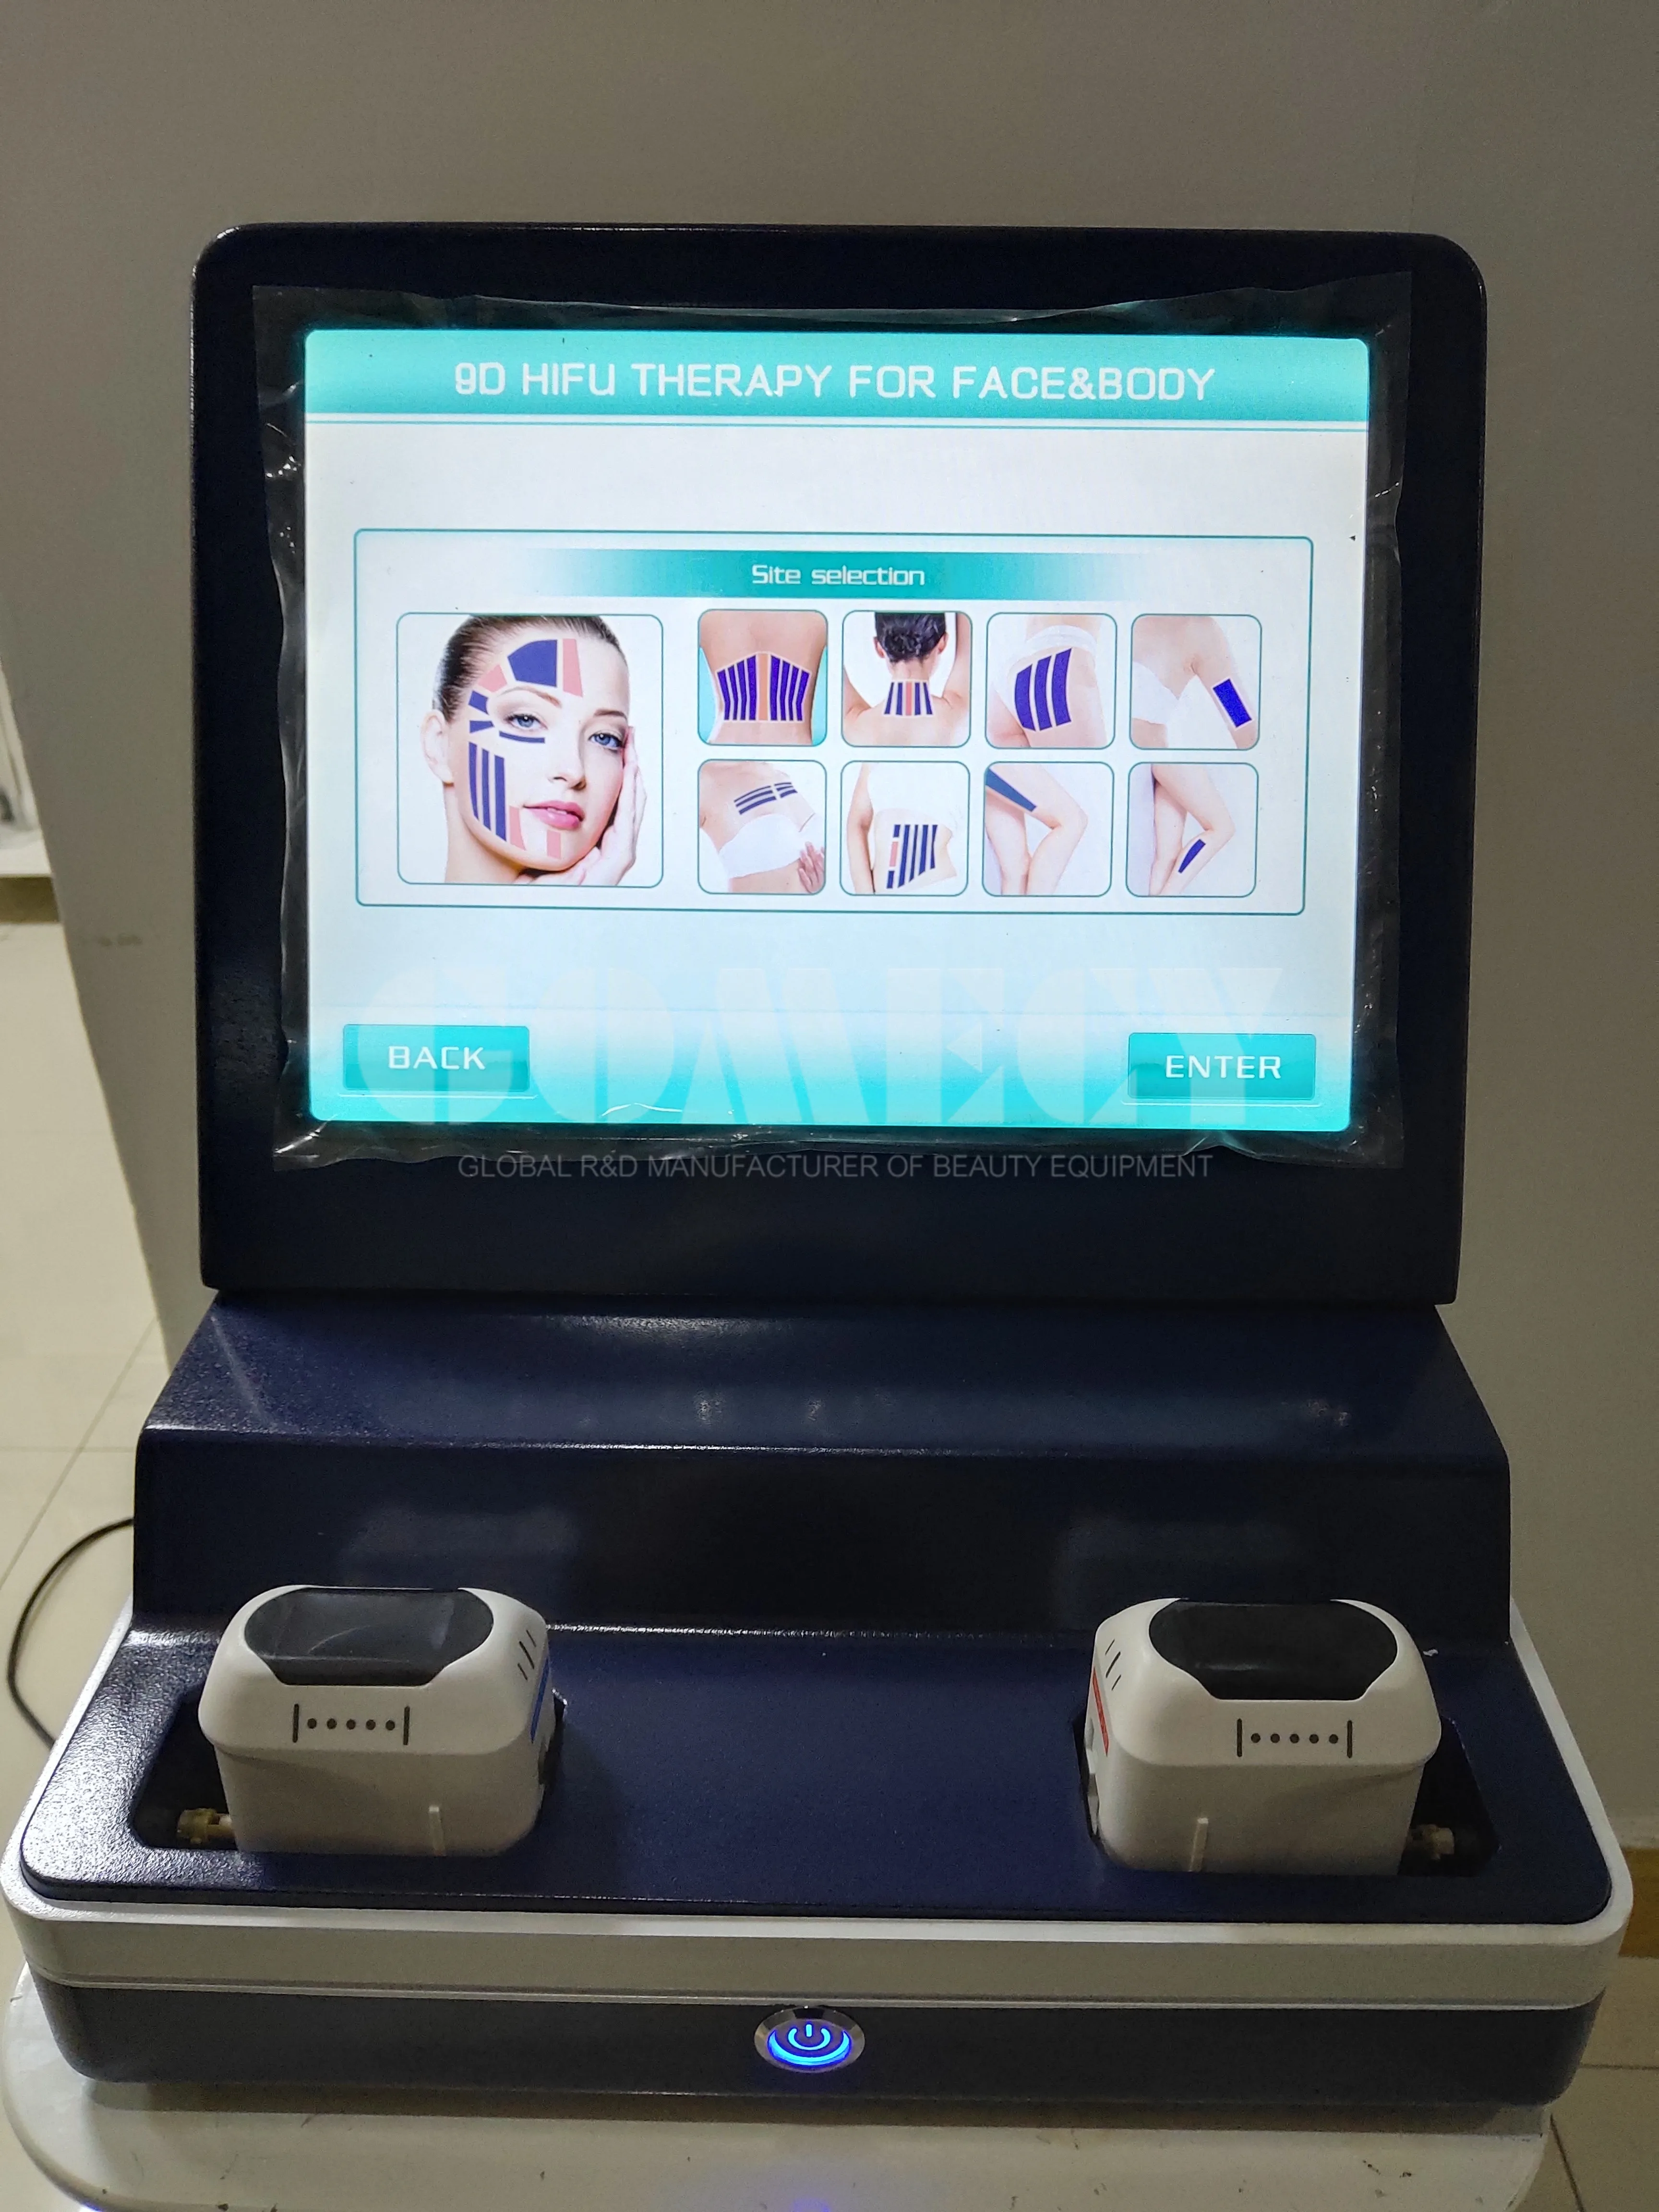 
GOMECY Best Portable 9D Hifu Facelift Anti Aging Beauty Machine for Abdomen Double Chin Fat Loss 